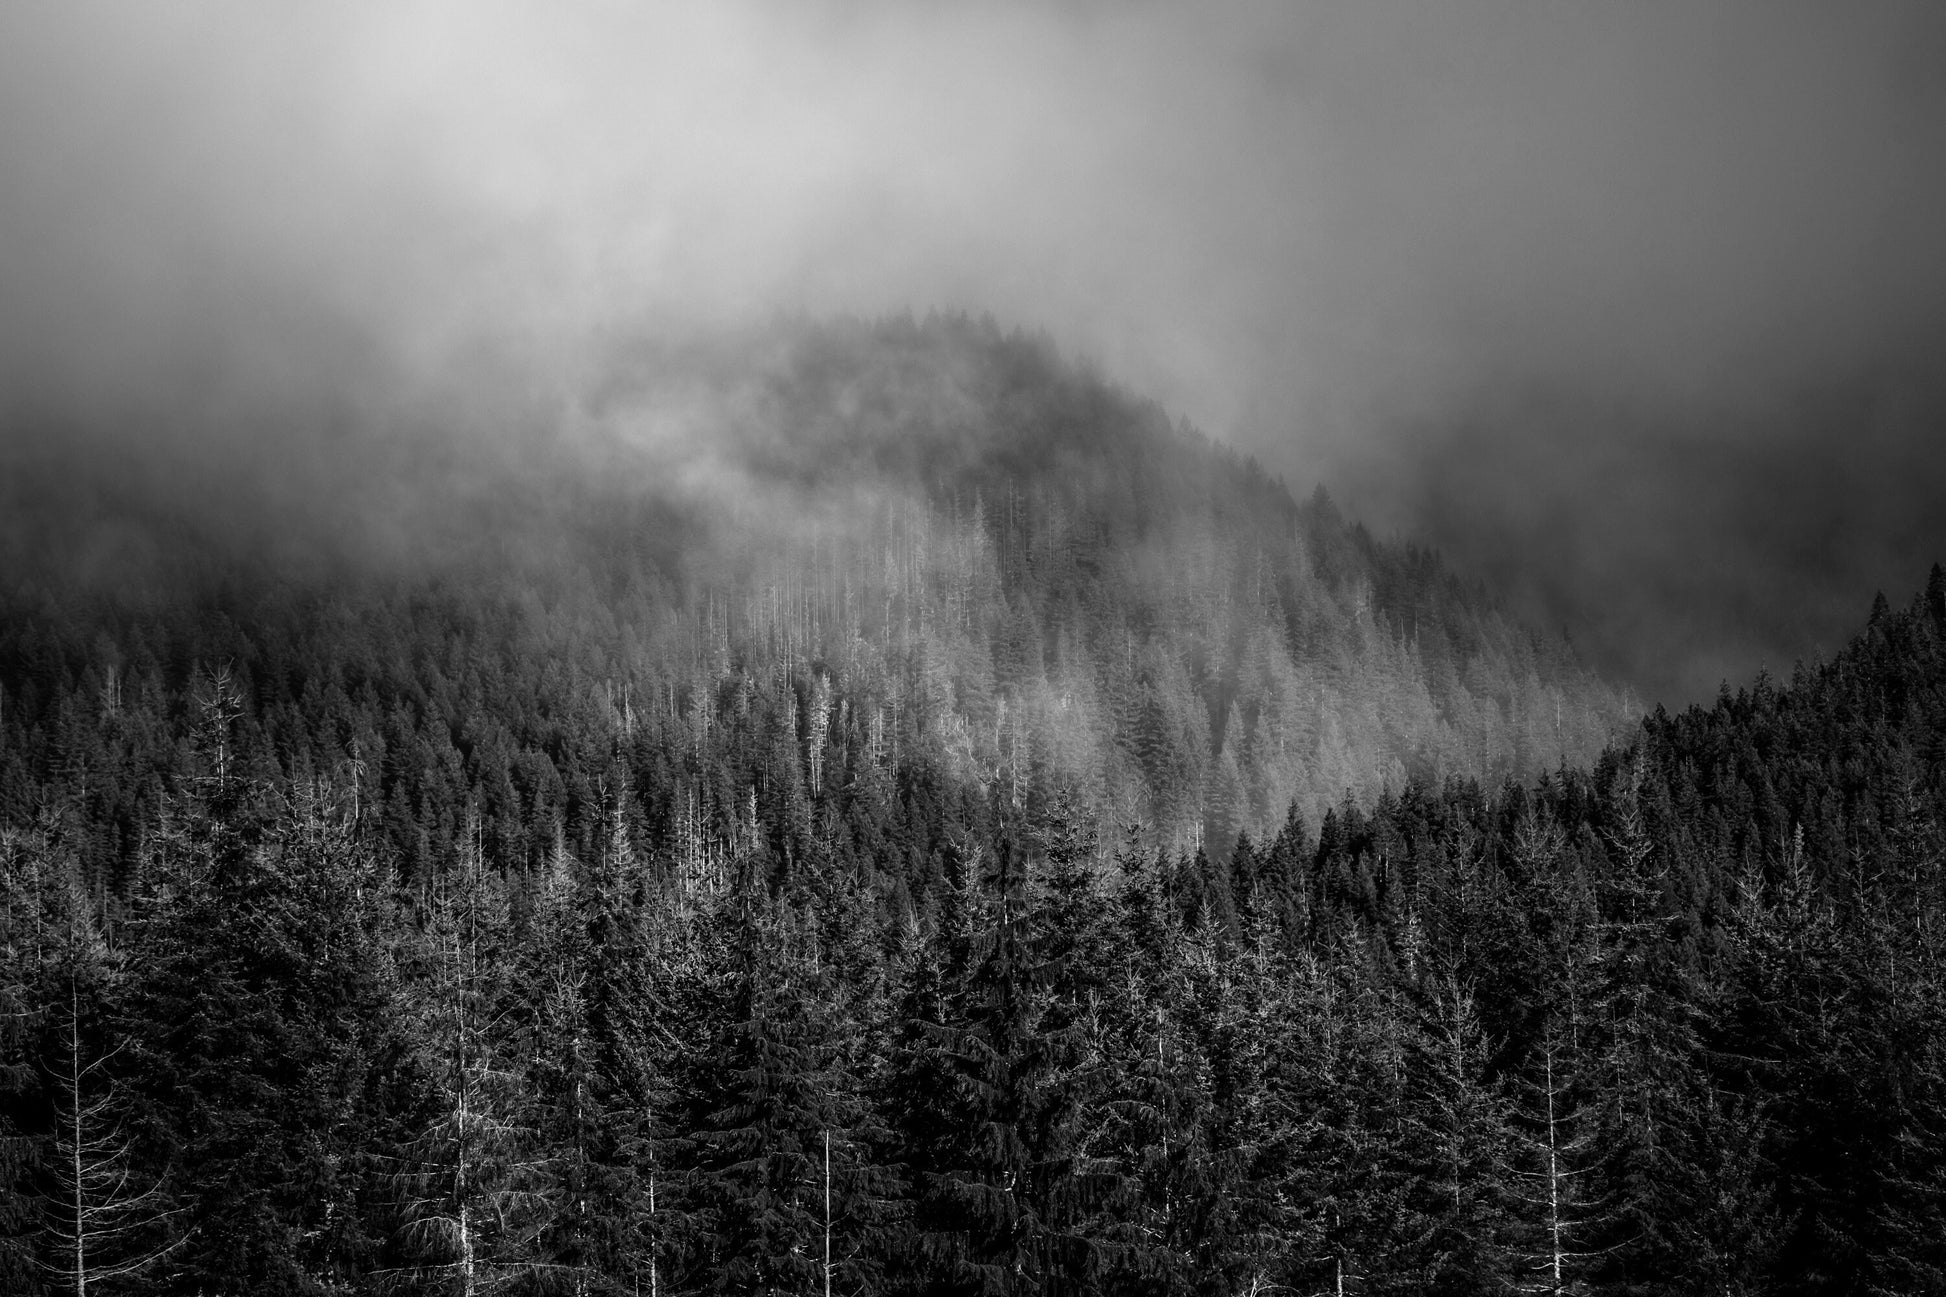 Misty Forest Print - Black & White Olympic National Park Mountain Fog Landscape Pine Trees Framed Fine Art Photography Home Wall Decor